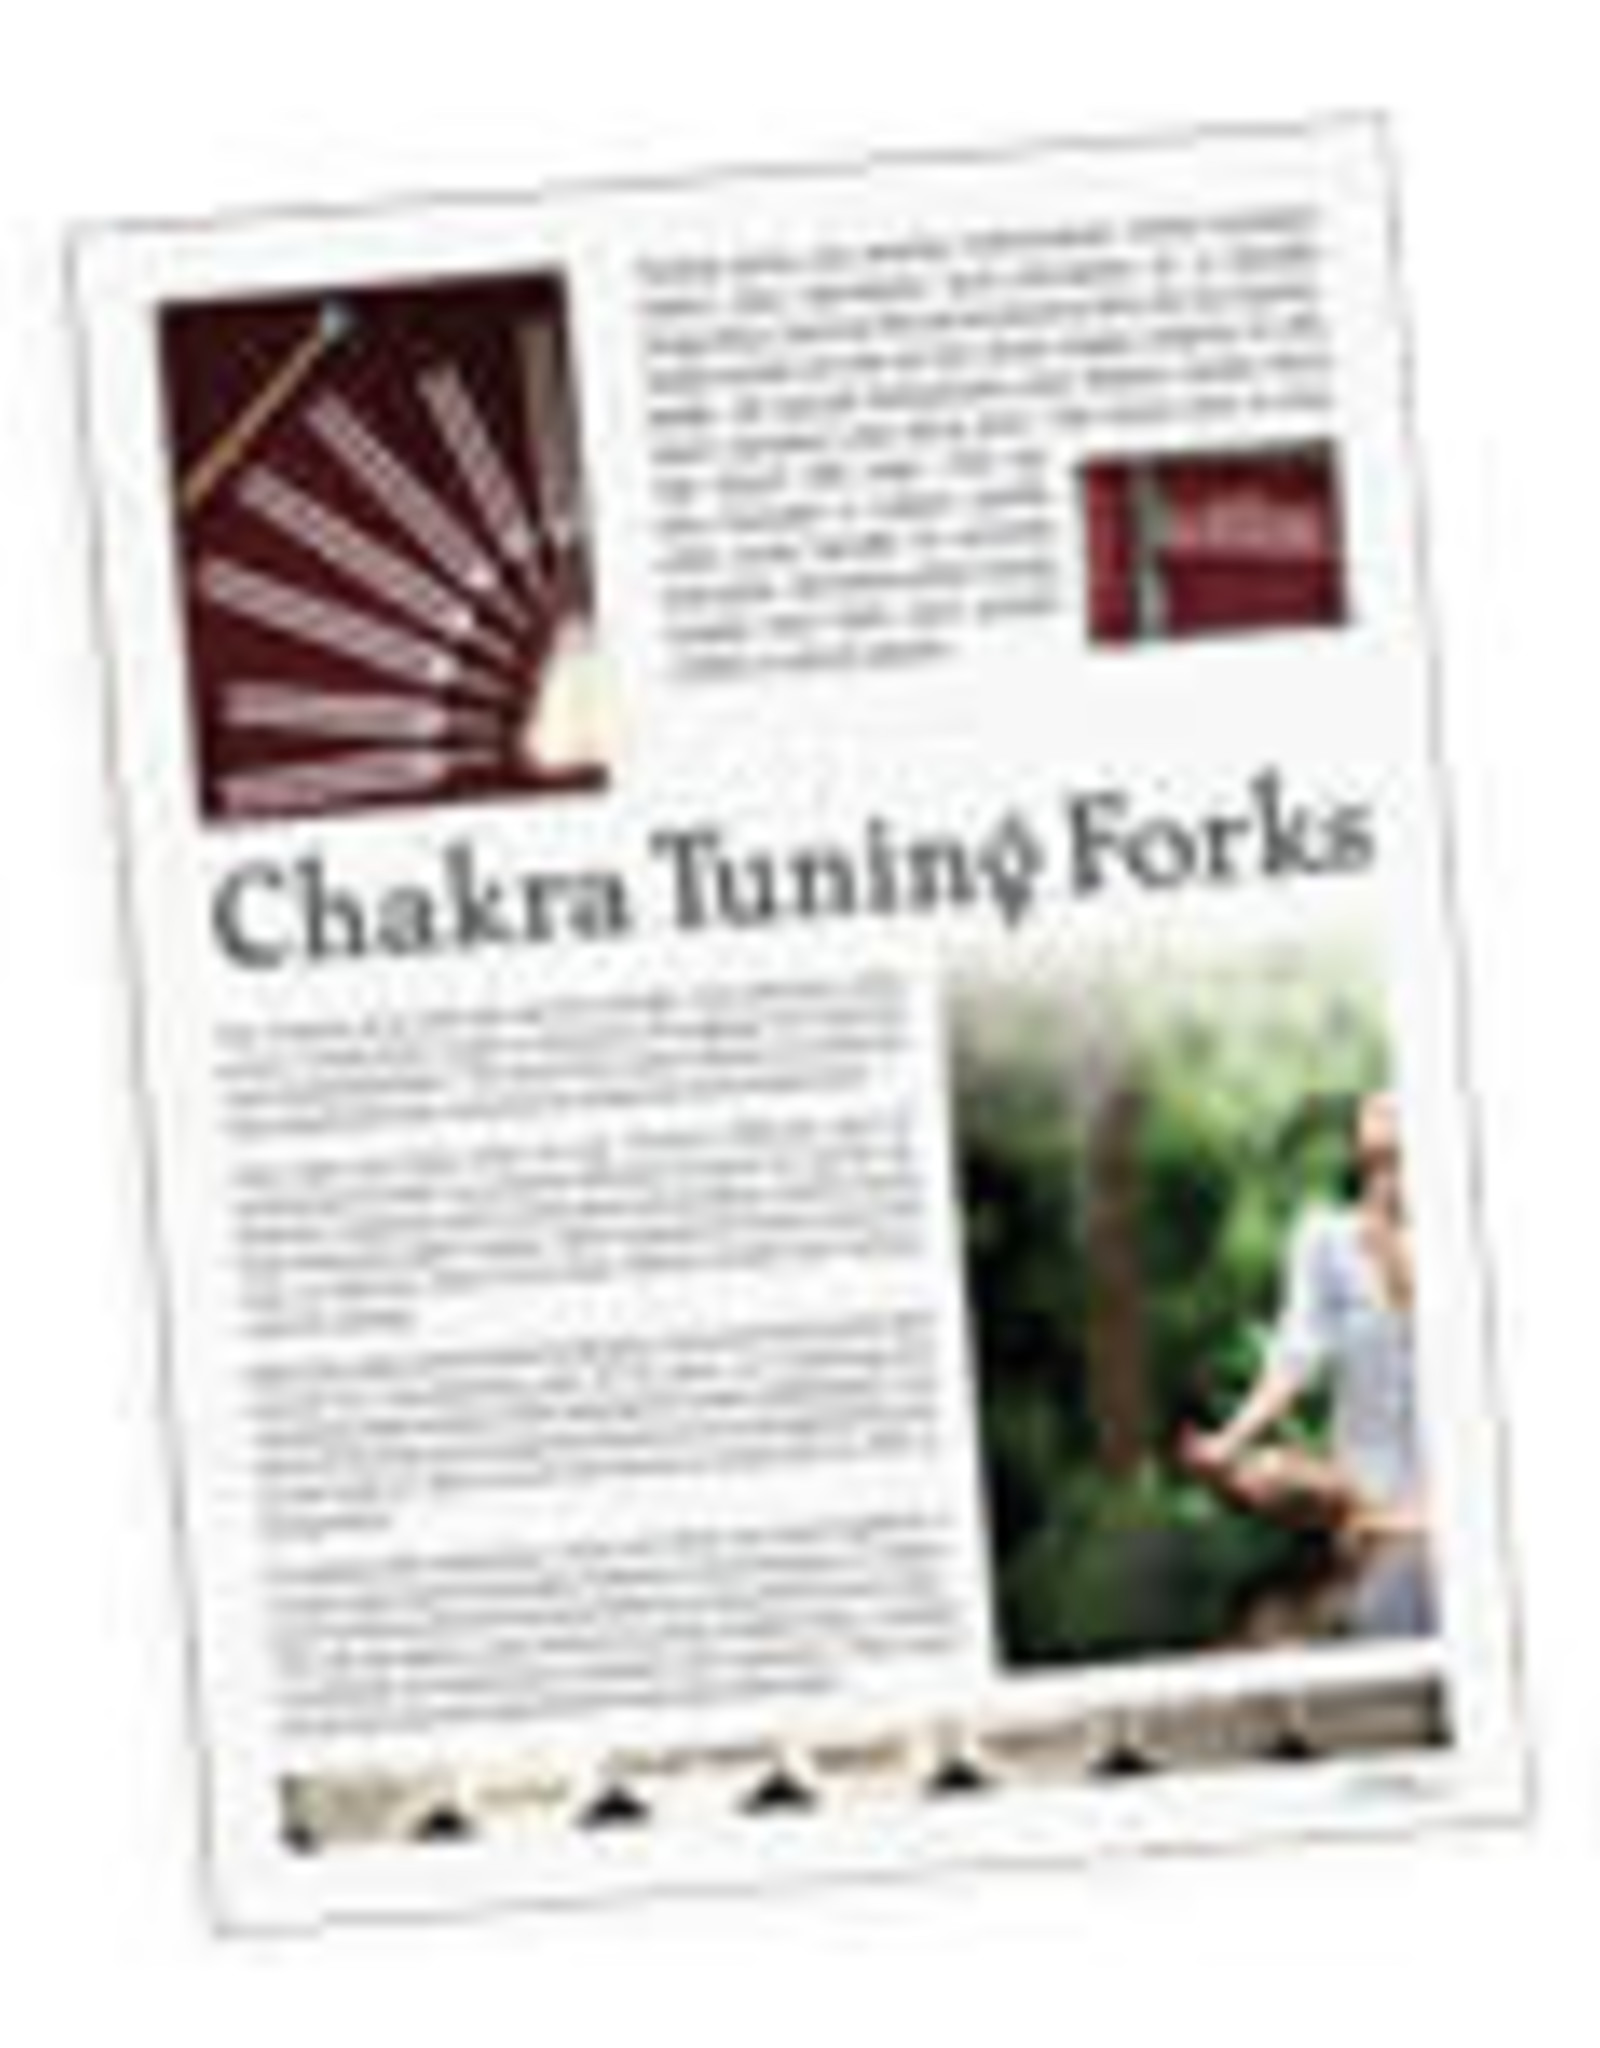 Chakra Tuning Fork, Merchandise Aid